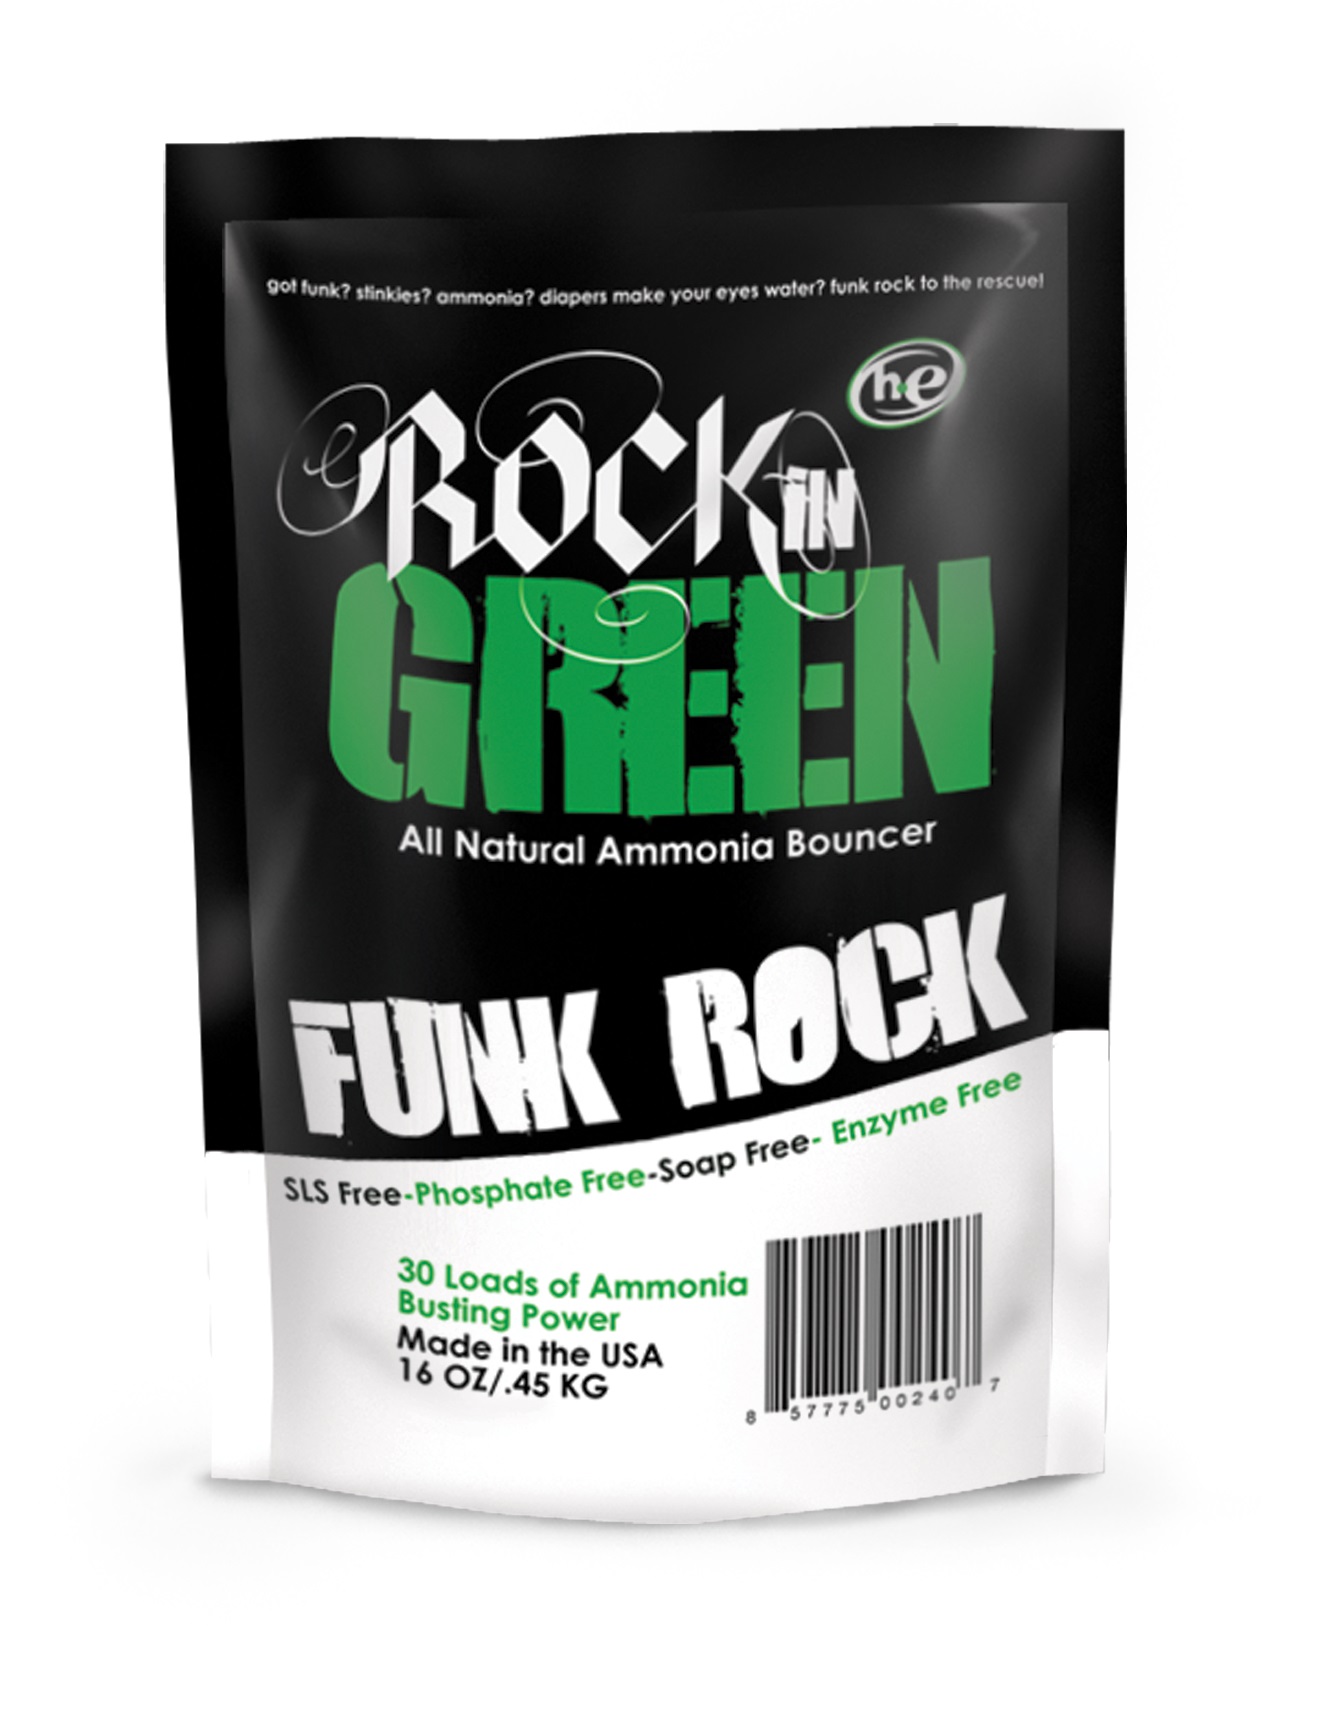 rockin-green-funk-rock-ammonia-bouncer.jpg